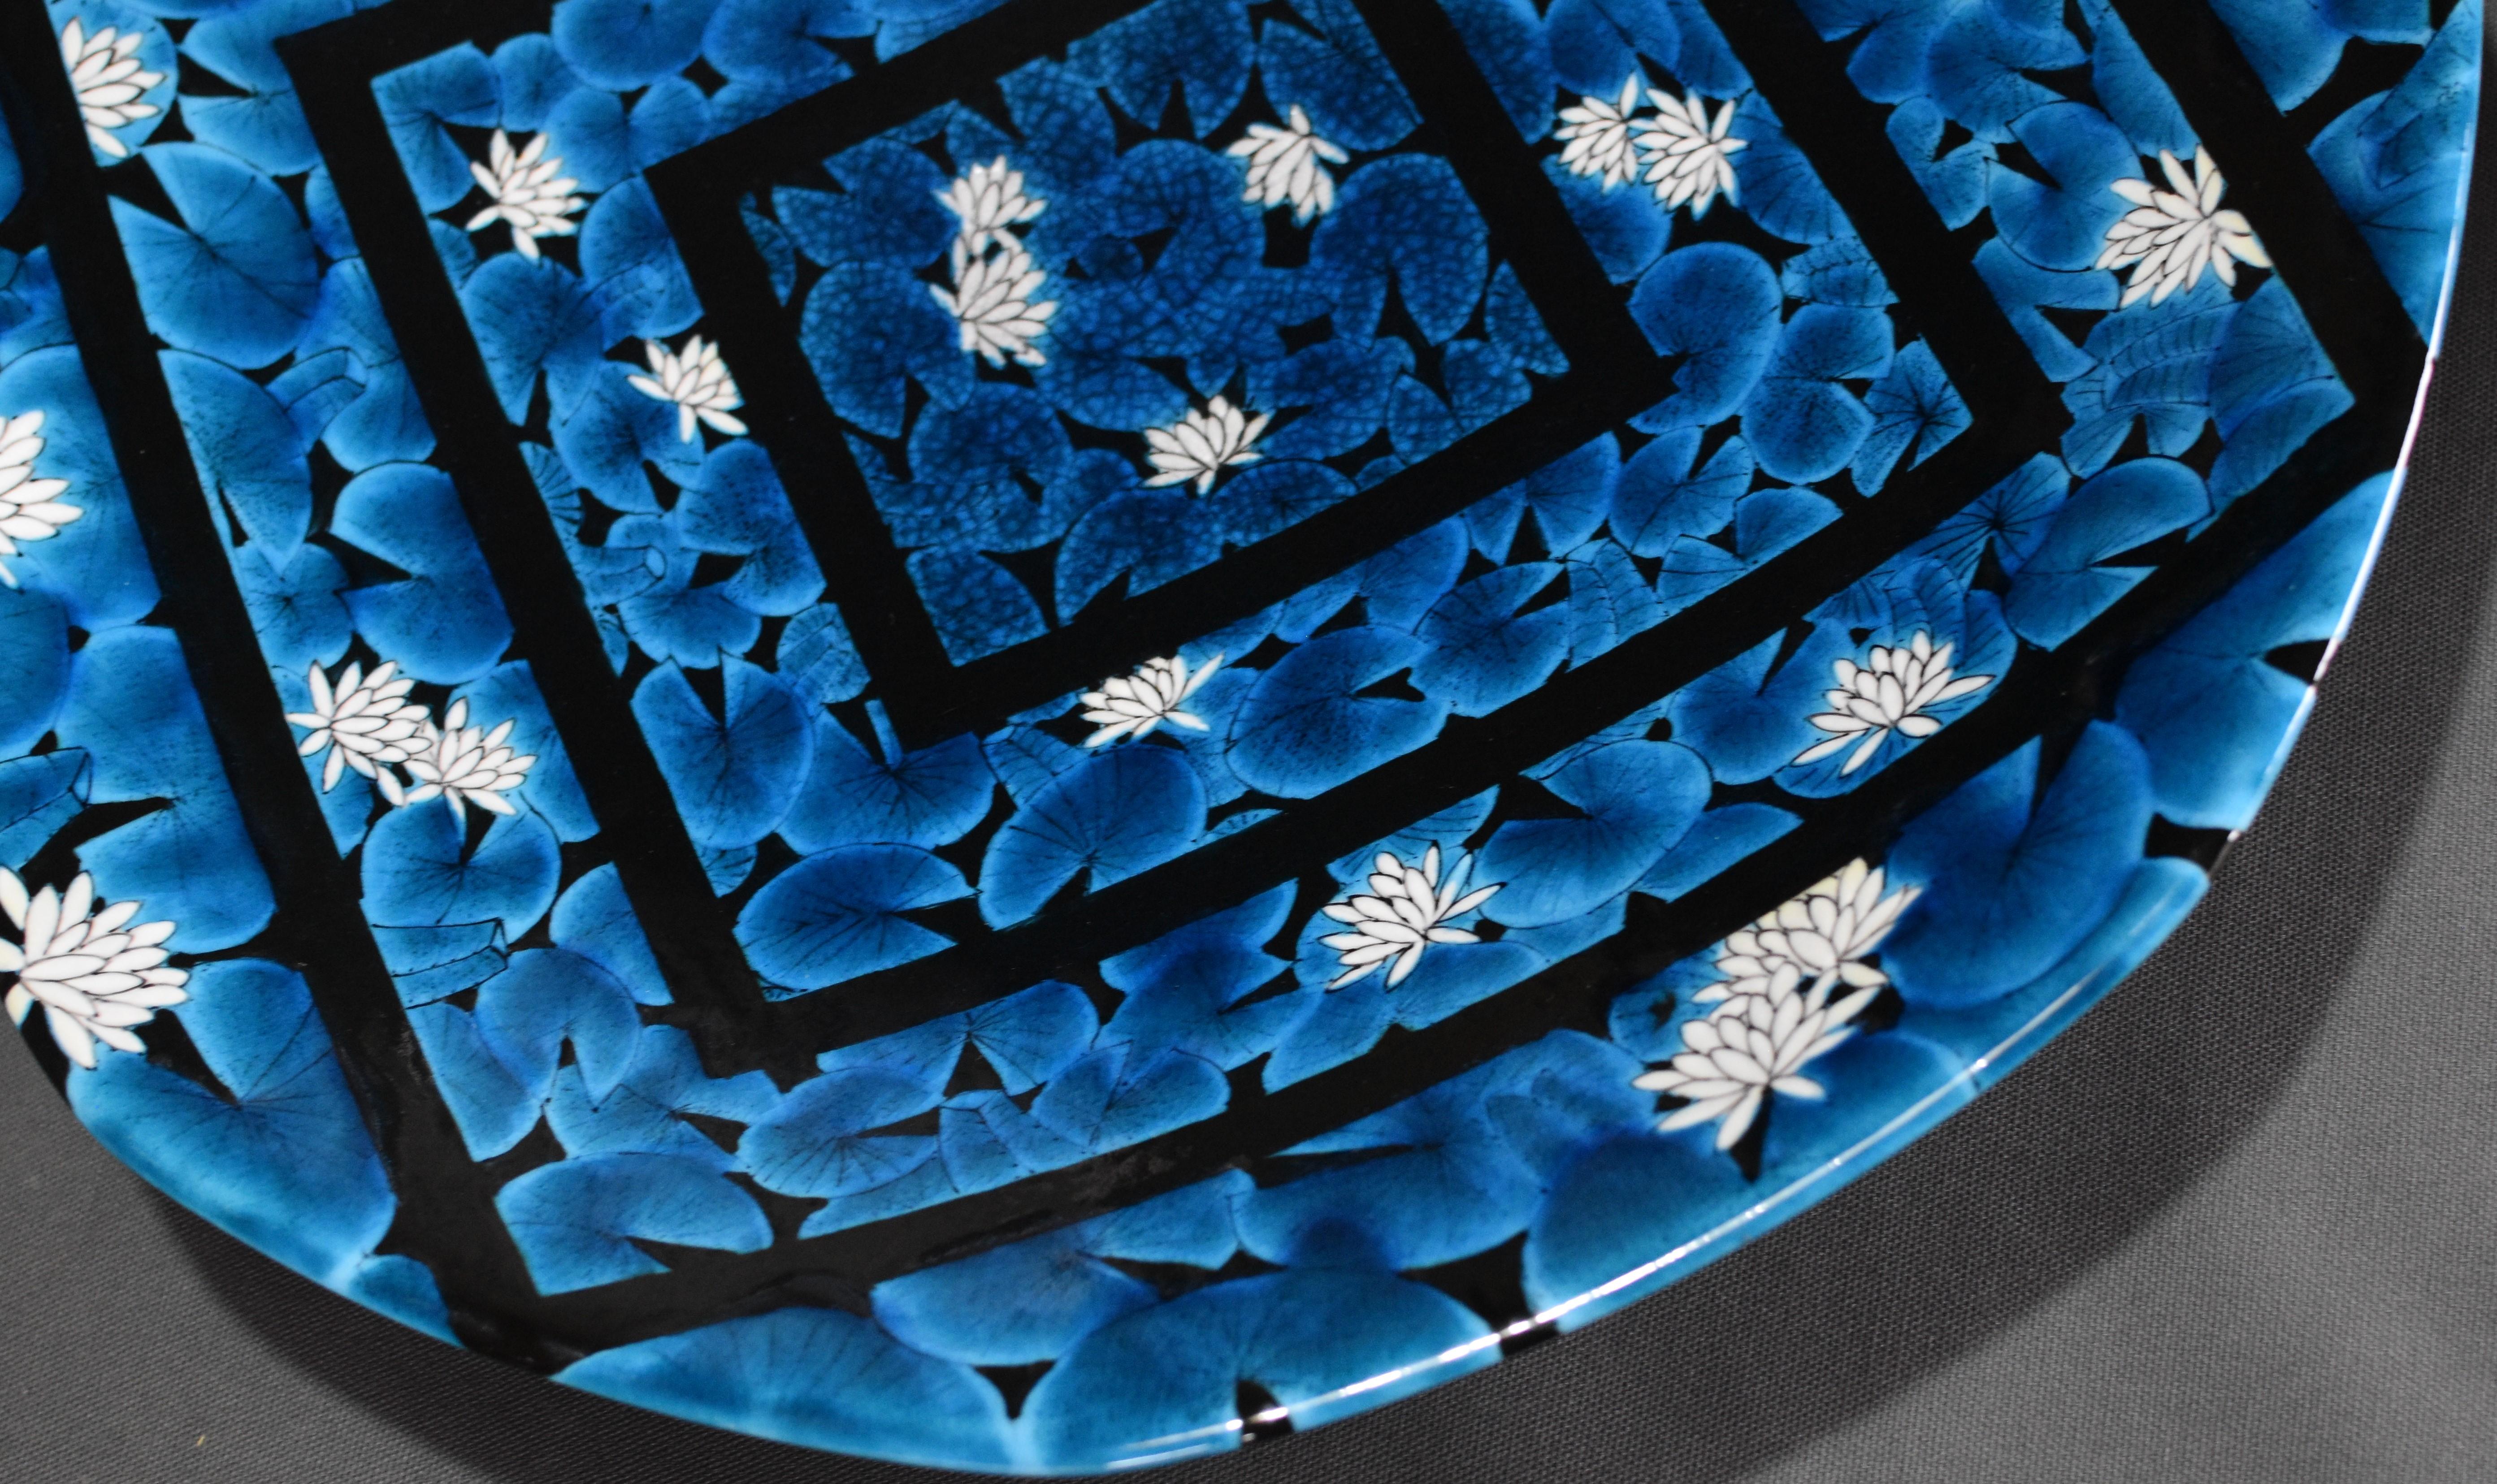 Japanese Blue Black Porcelain Vase by Contemporary Master Artist For Sale 1